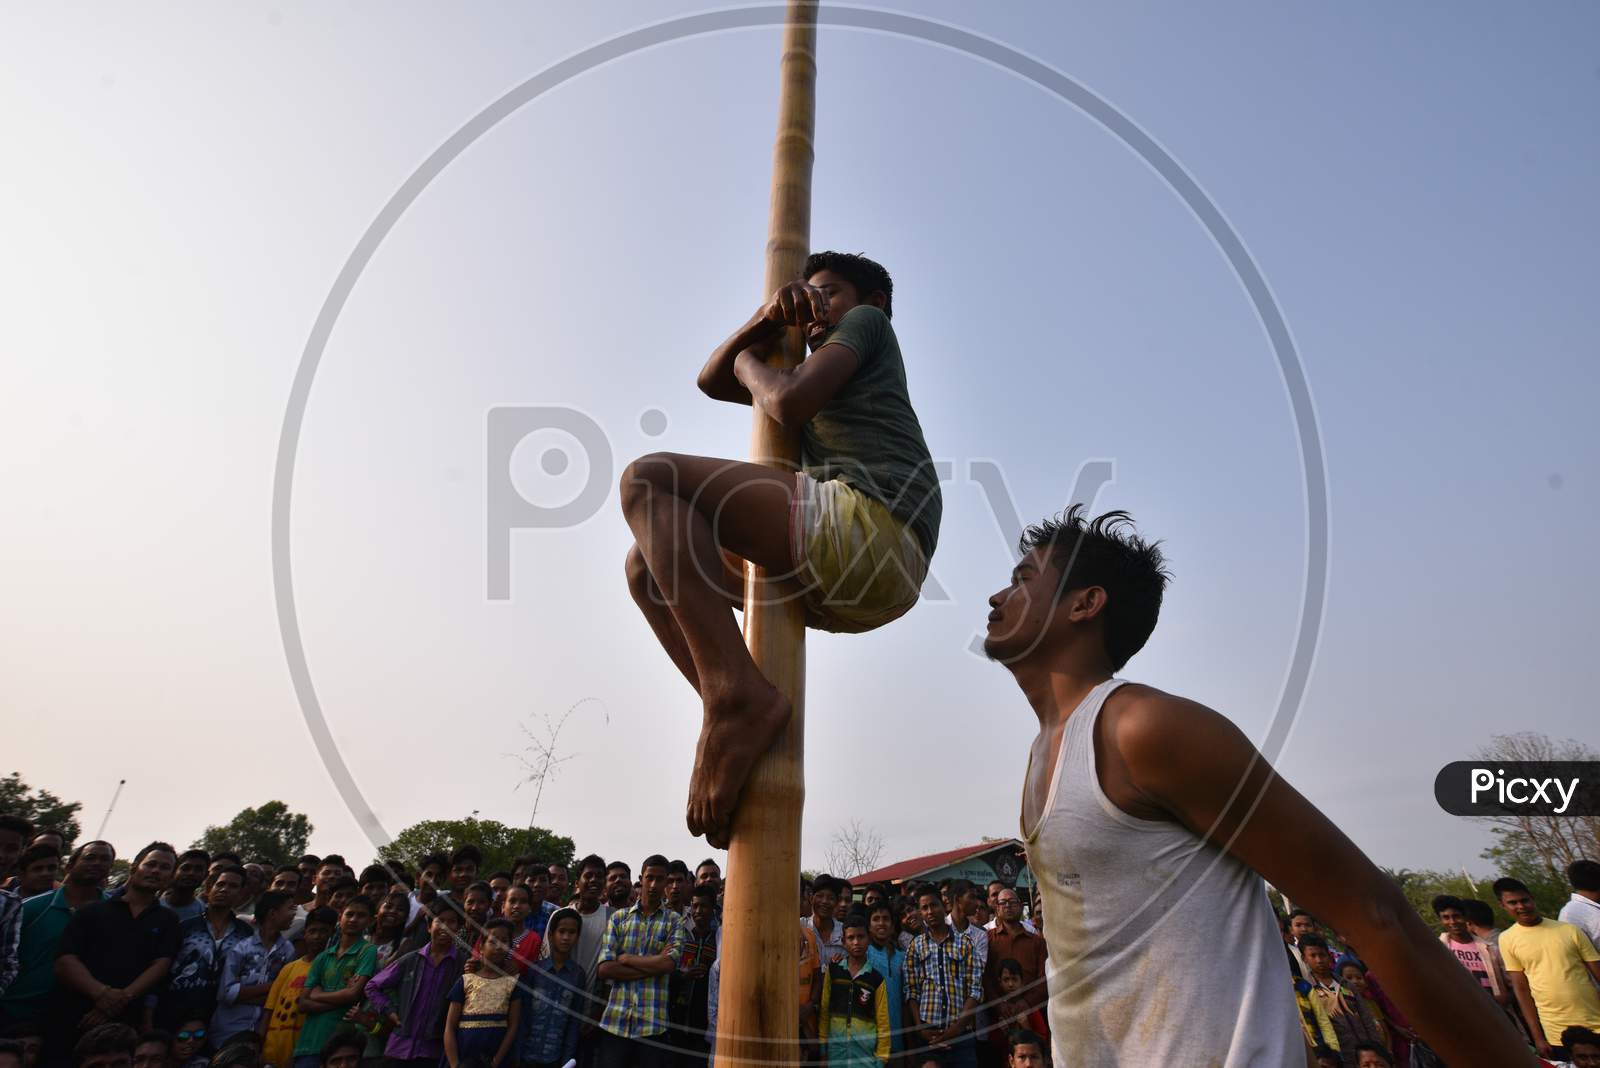 Young Assamese Boy Climbing up on Bamboo Pole at  Suwori Festival Celebrations in Boko, Assam